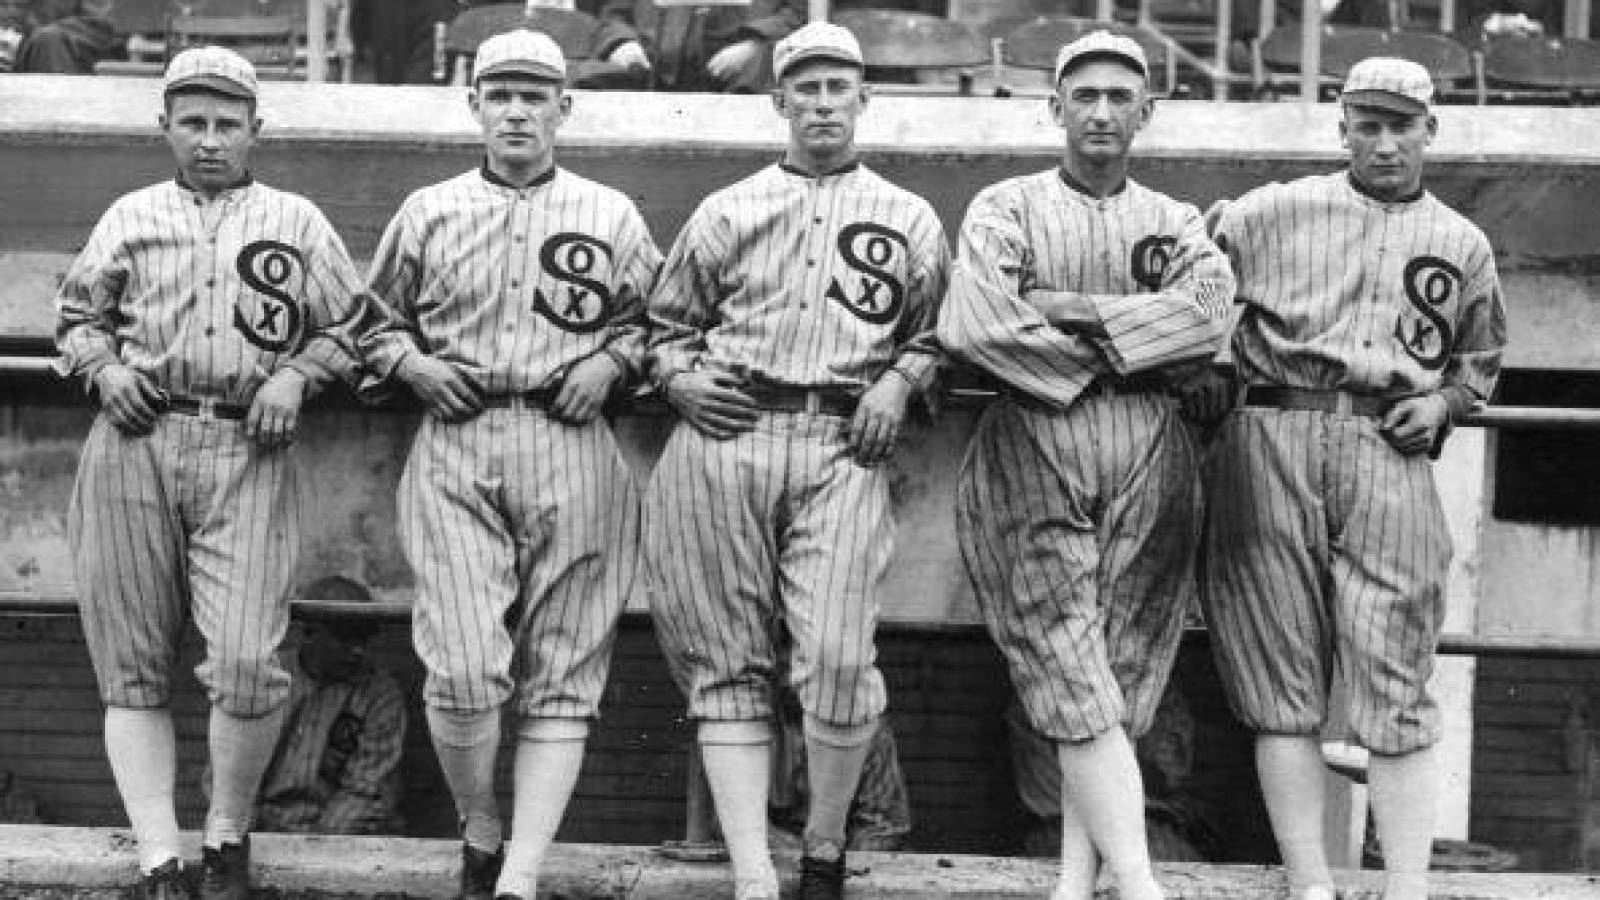 1919 World Series recap